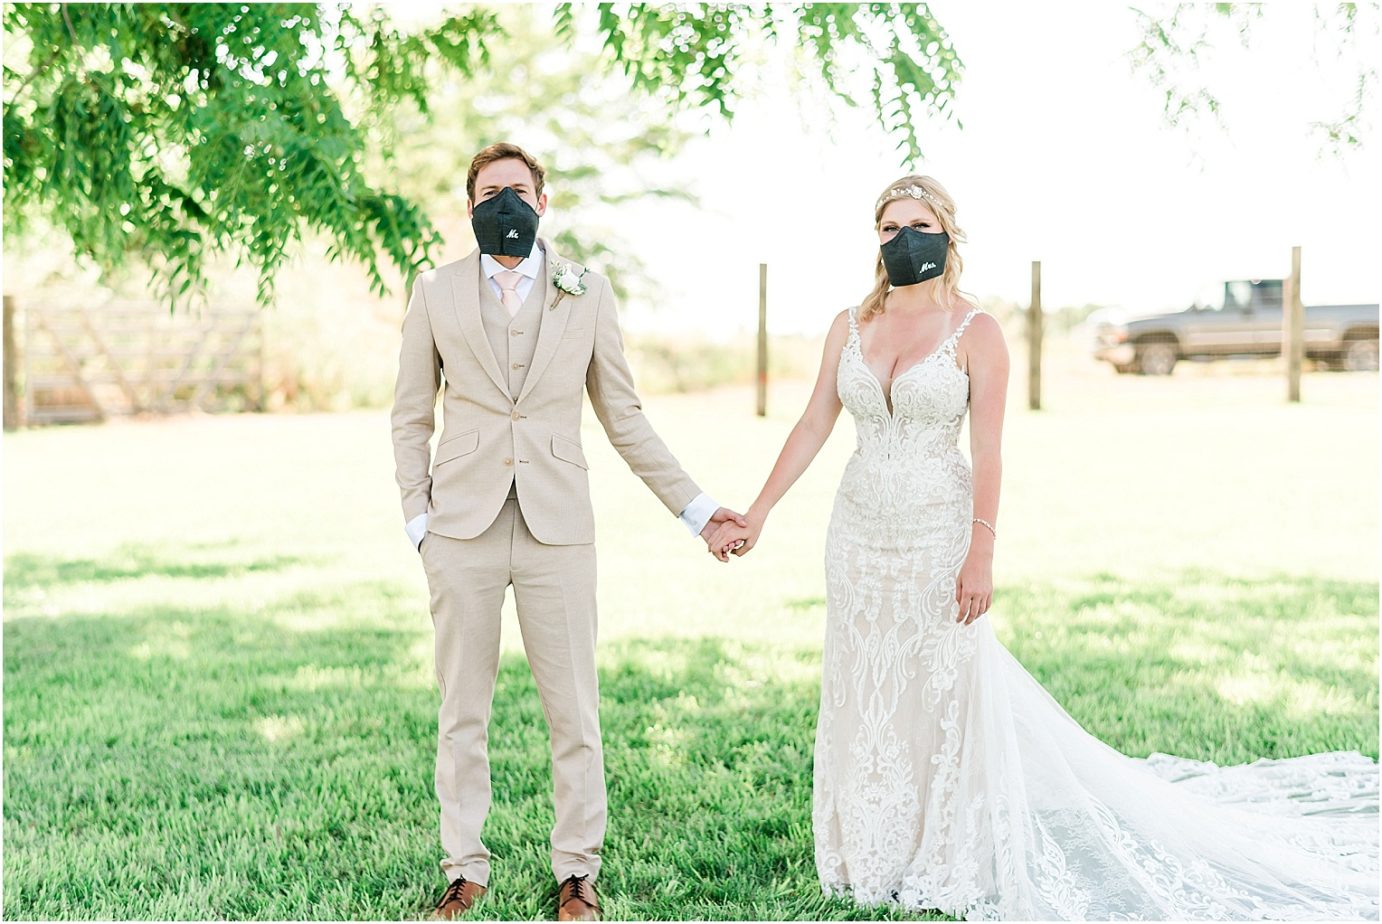 Prosser Farm Wedding Yakima Photographer Jake and Bri bride and groom with COVID masks